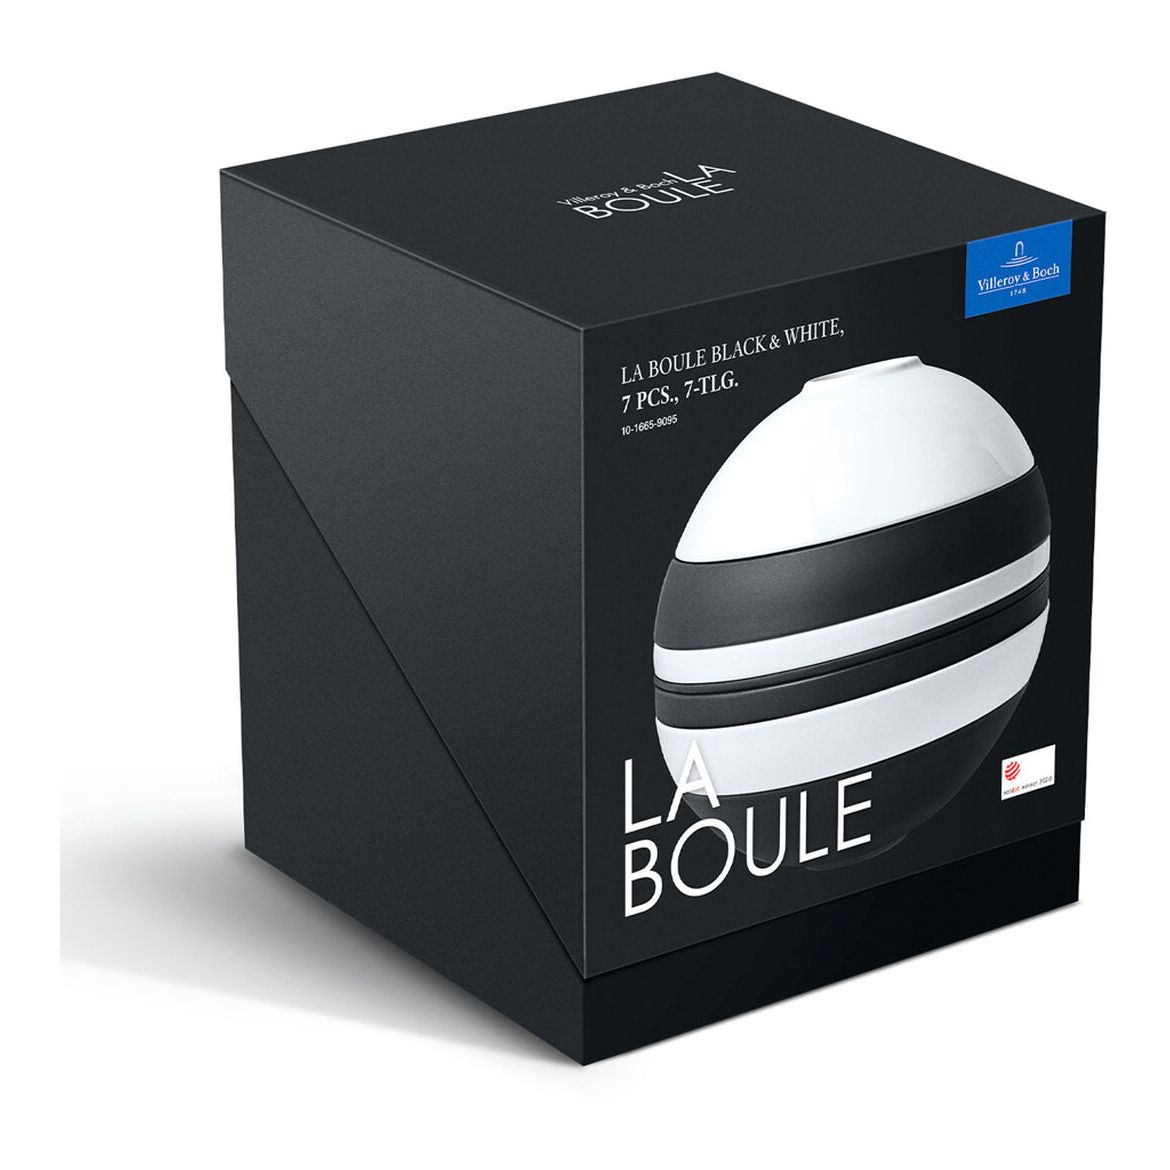 La Boule black & white Iconic Villeroy & Boch